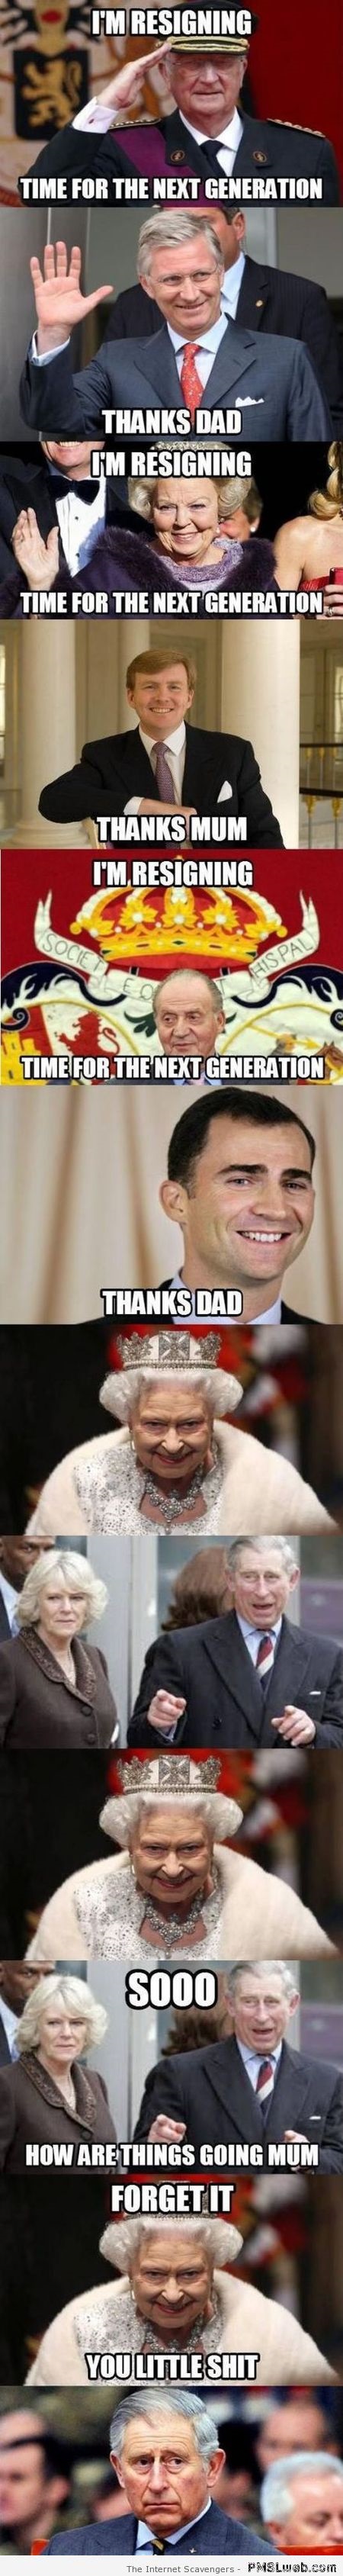 Funny Queen Elizabeth does not resign at PMSLweb.com